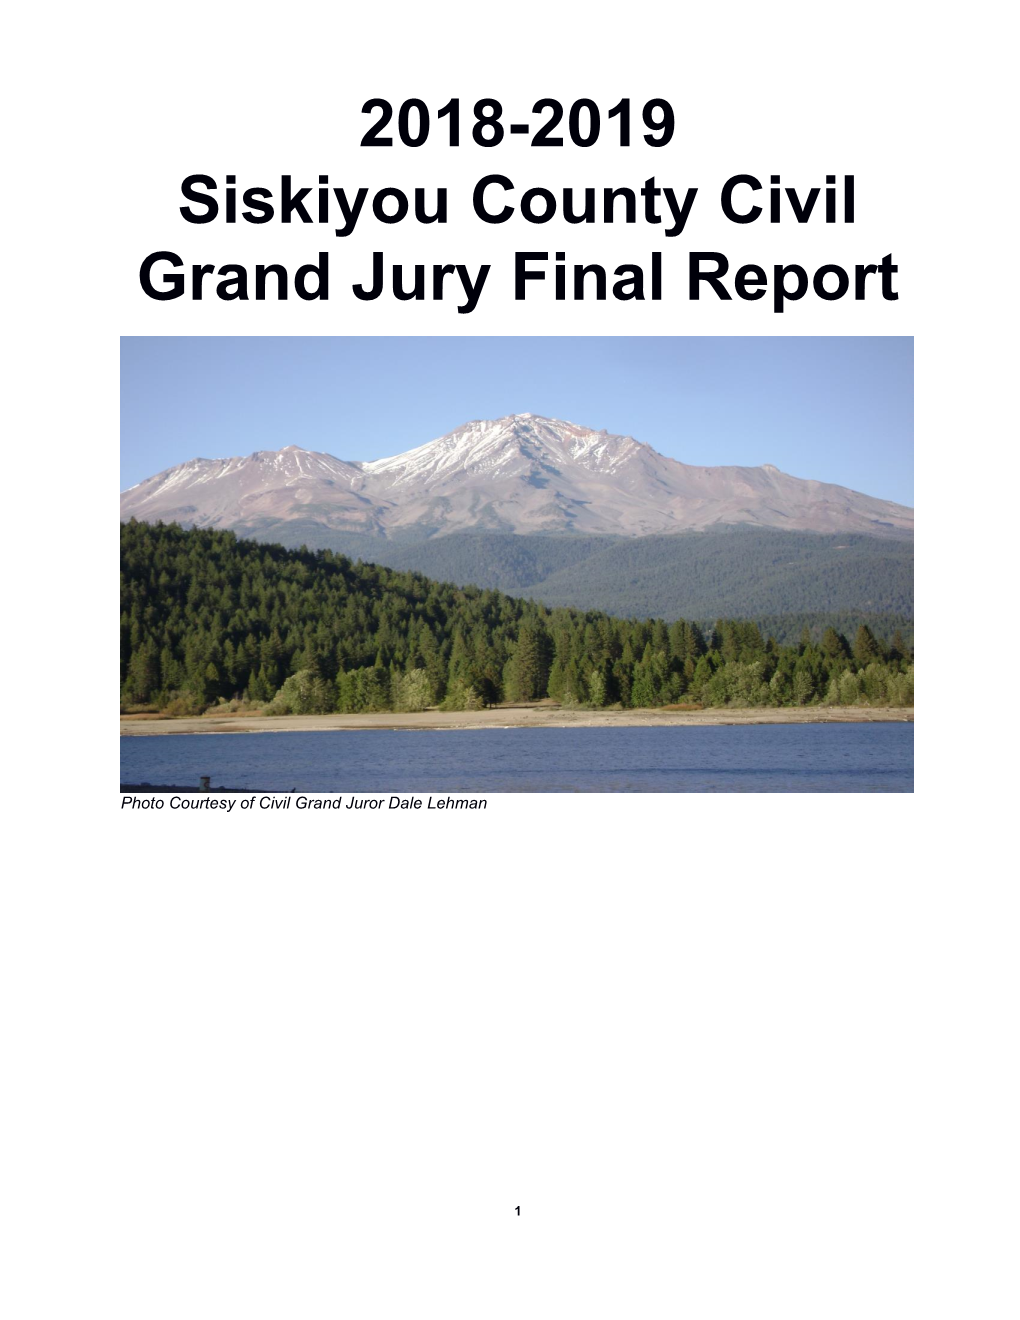 2018-2019 Siskiyou County Civil Grand Jury Final Report